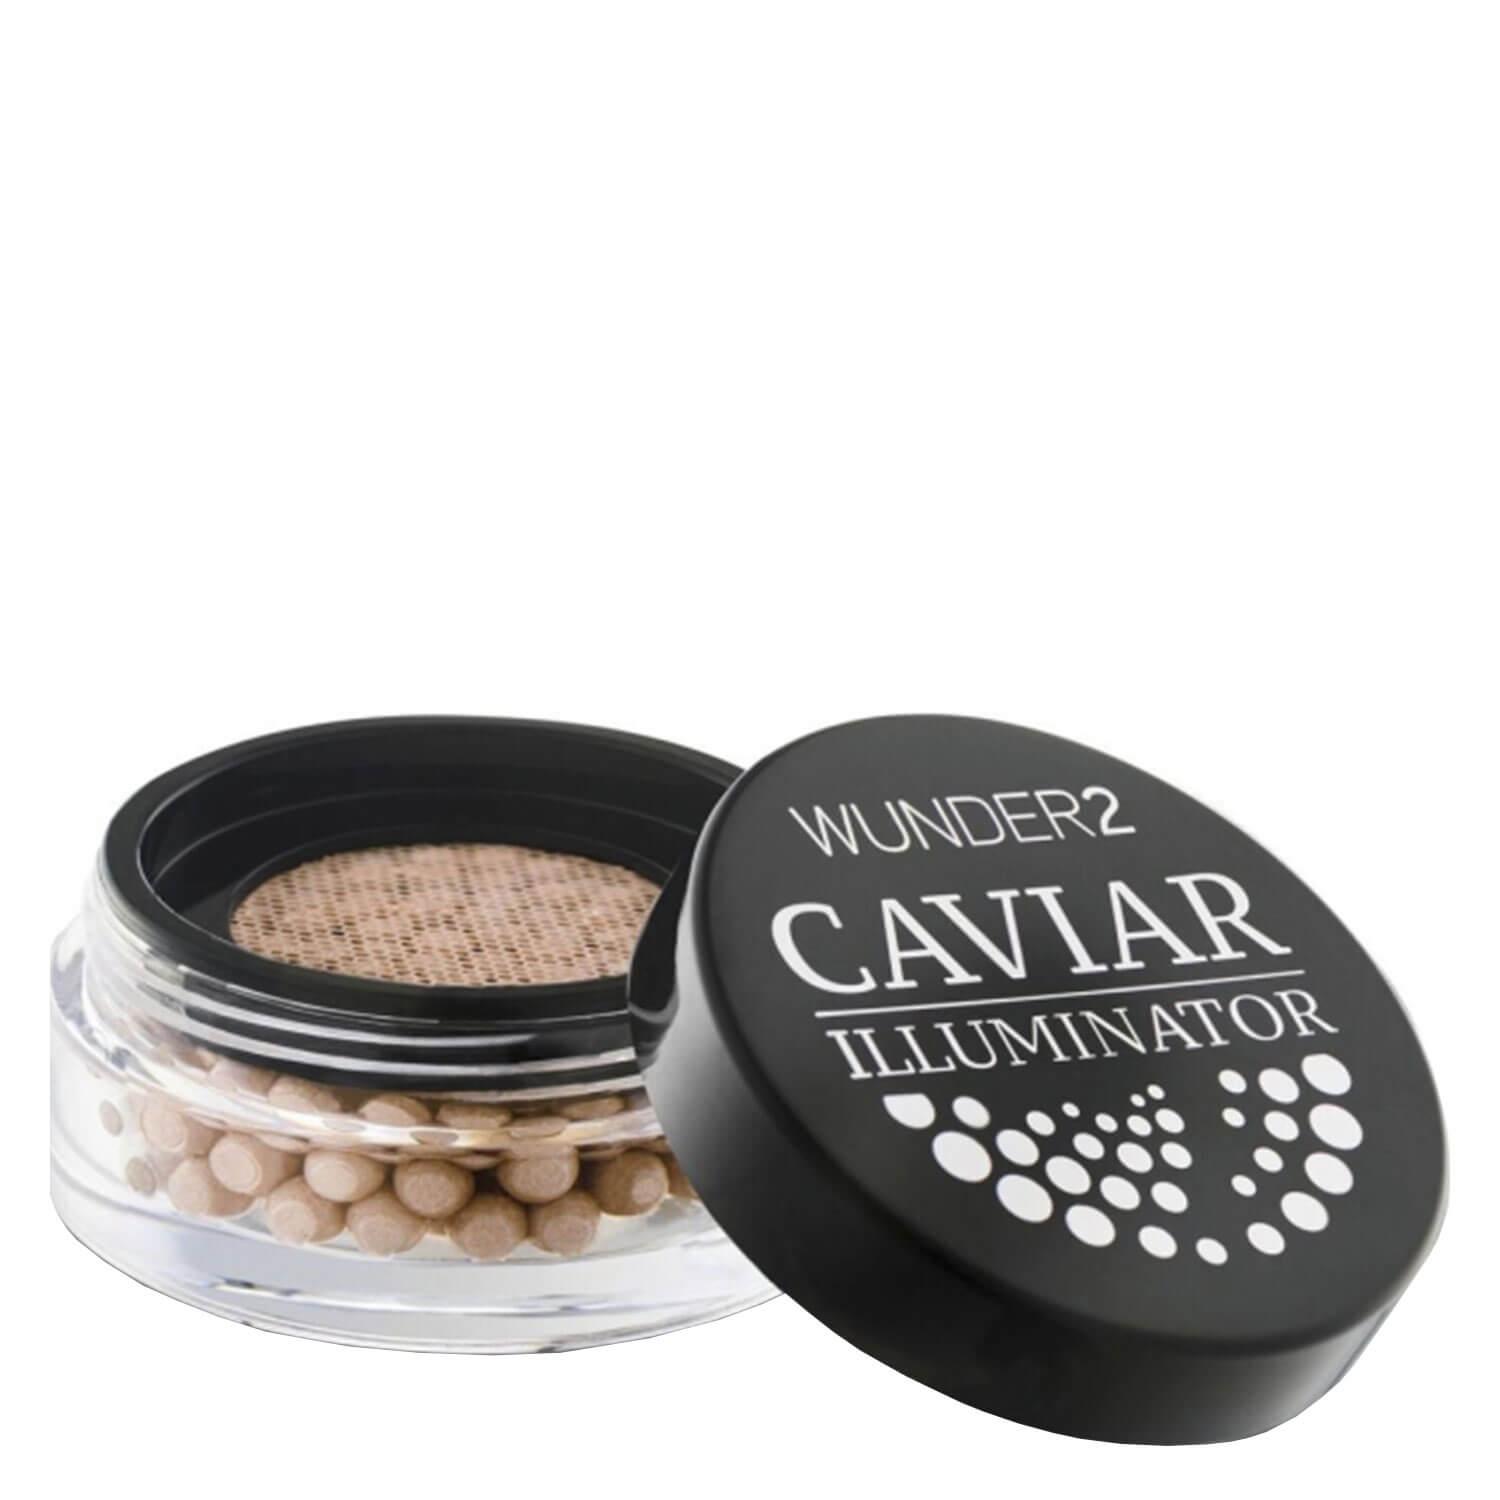 WUNDER2 - Caviar Illuminator Golden Sand